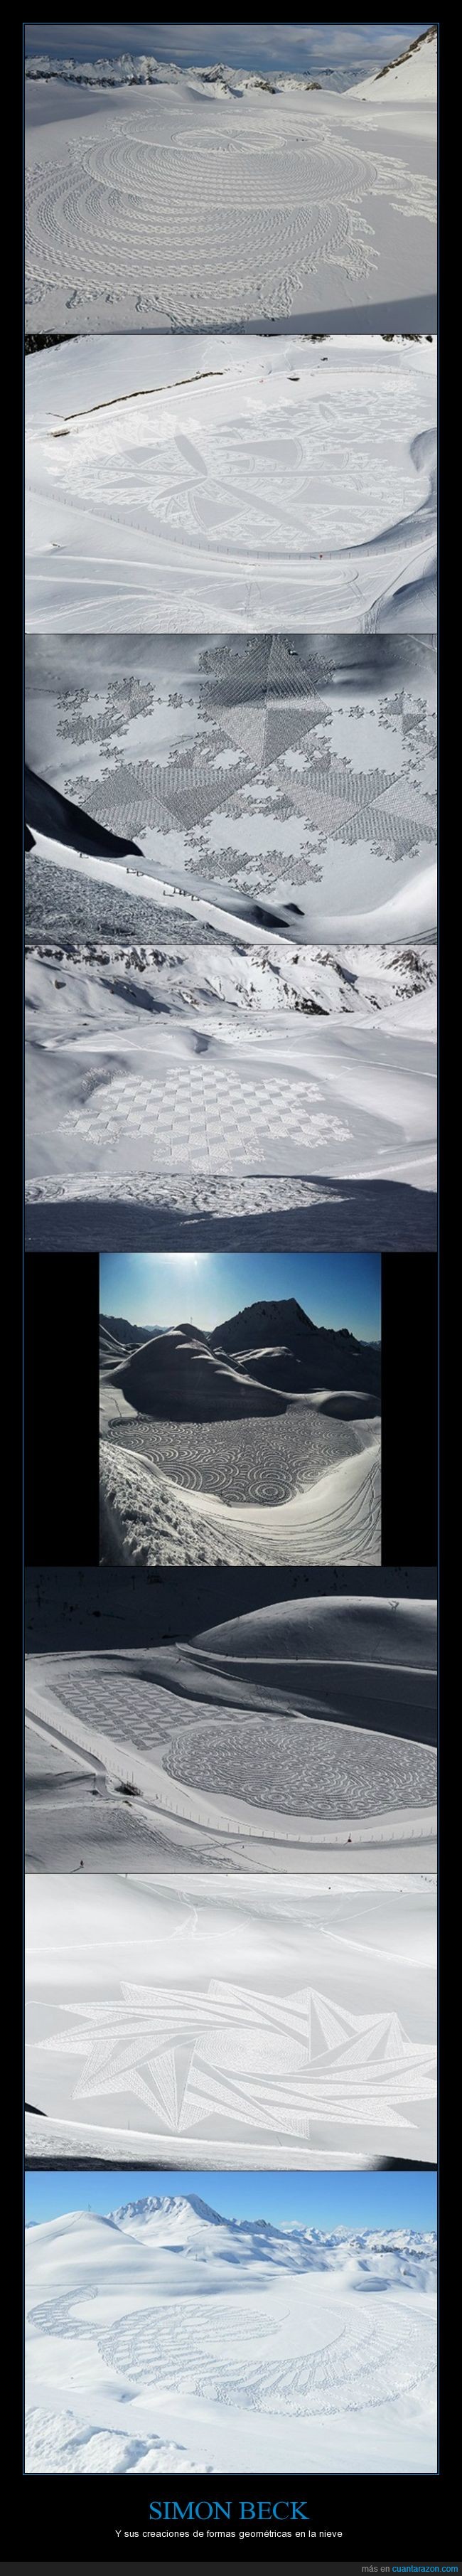 lagos cubiertos de nieve,formas geométricas,nieve,Alpes franceses,Simon Beck,Snow Art